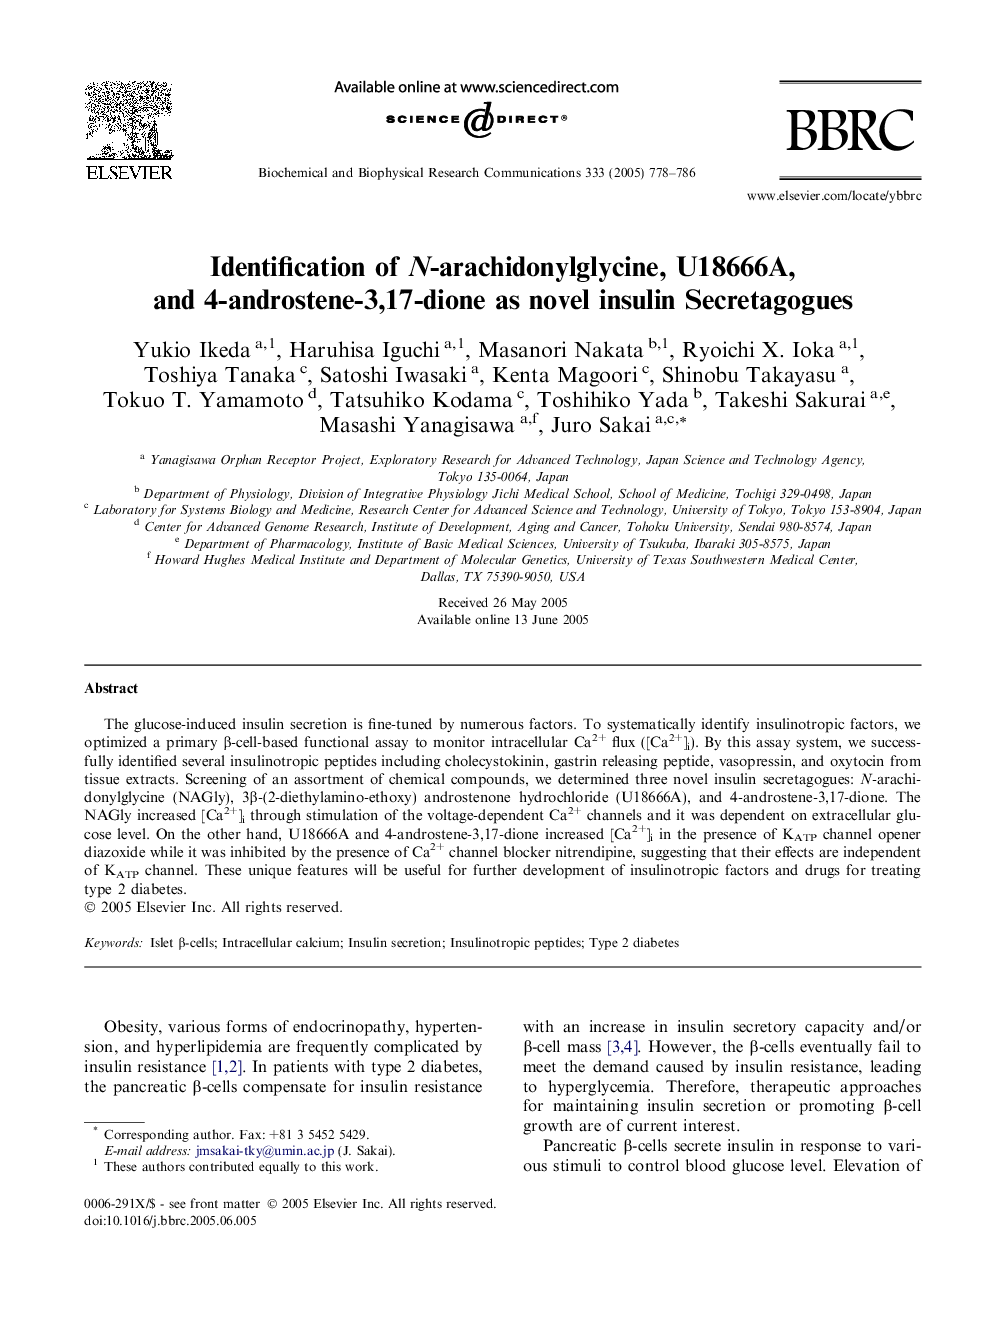 Identification of N-arachidonylglycine, U18666A, and 4-androstene-3,17-dione as novel insulin Secretagogues